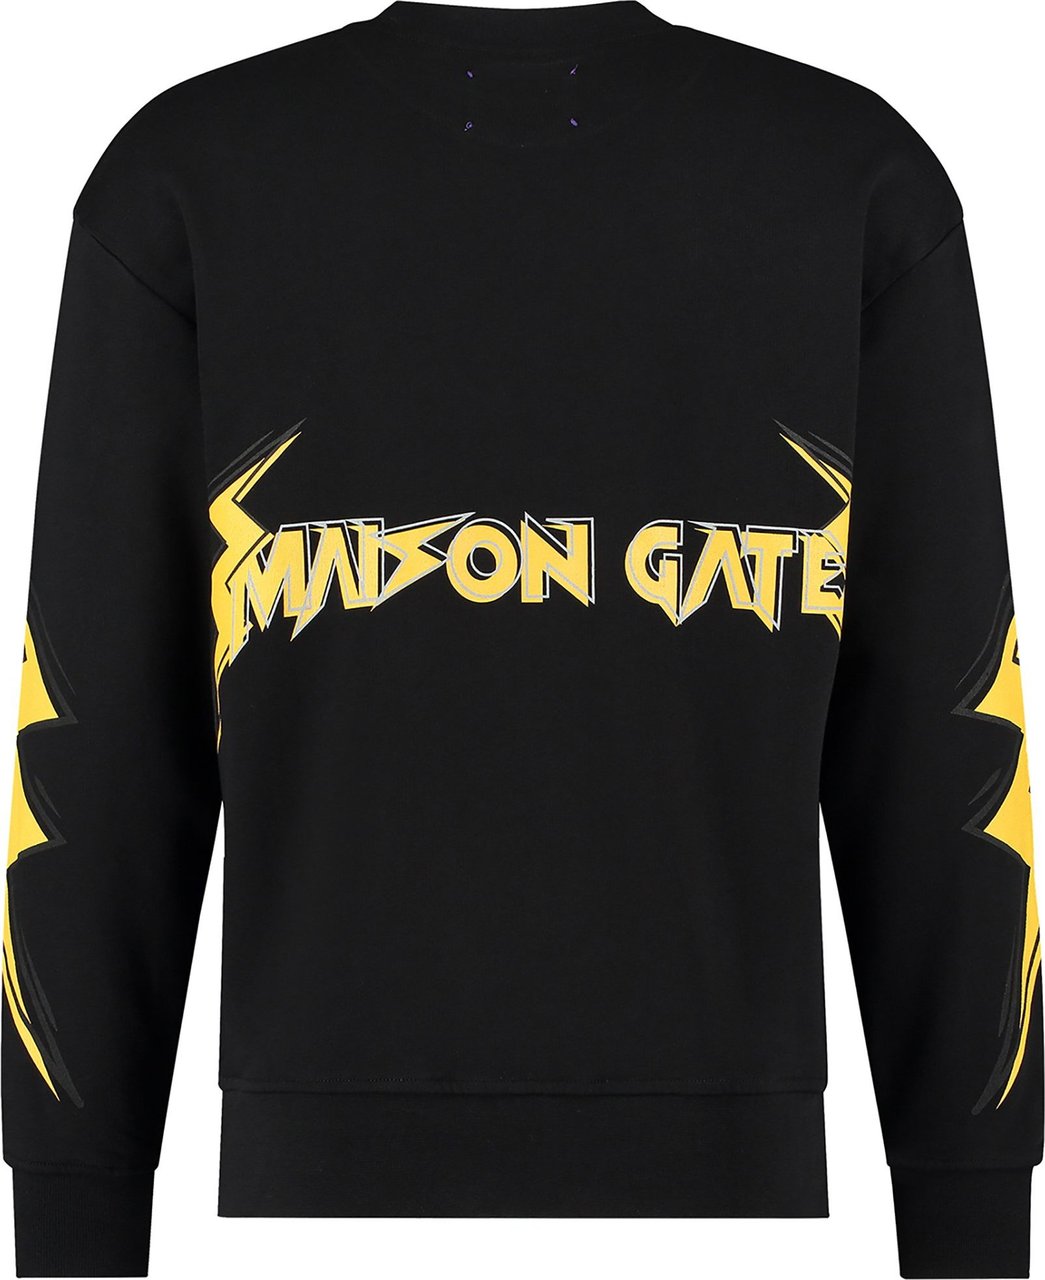 Maison Gate Thunder Sweater Zwart